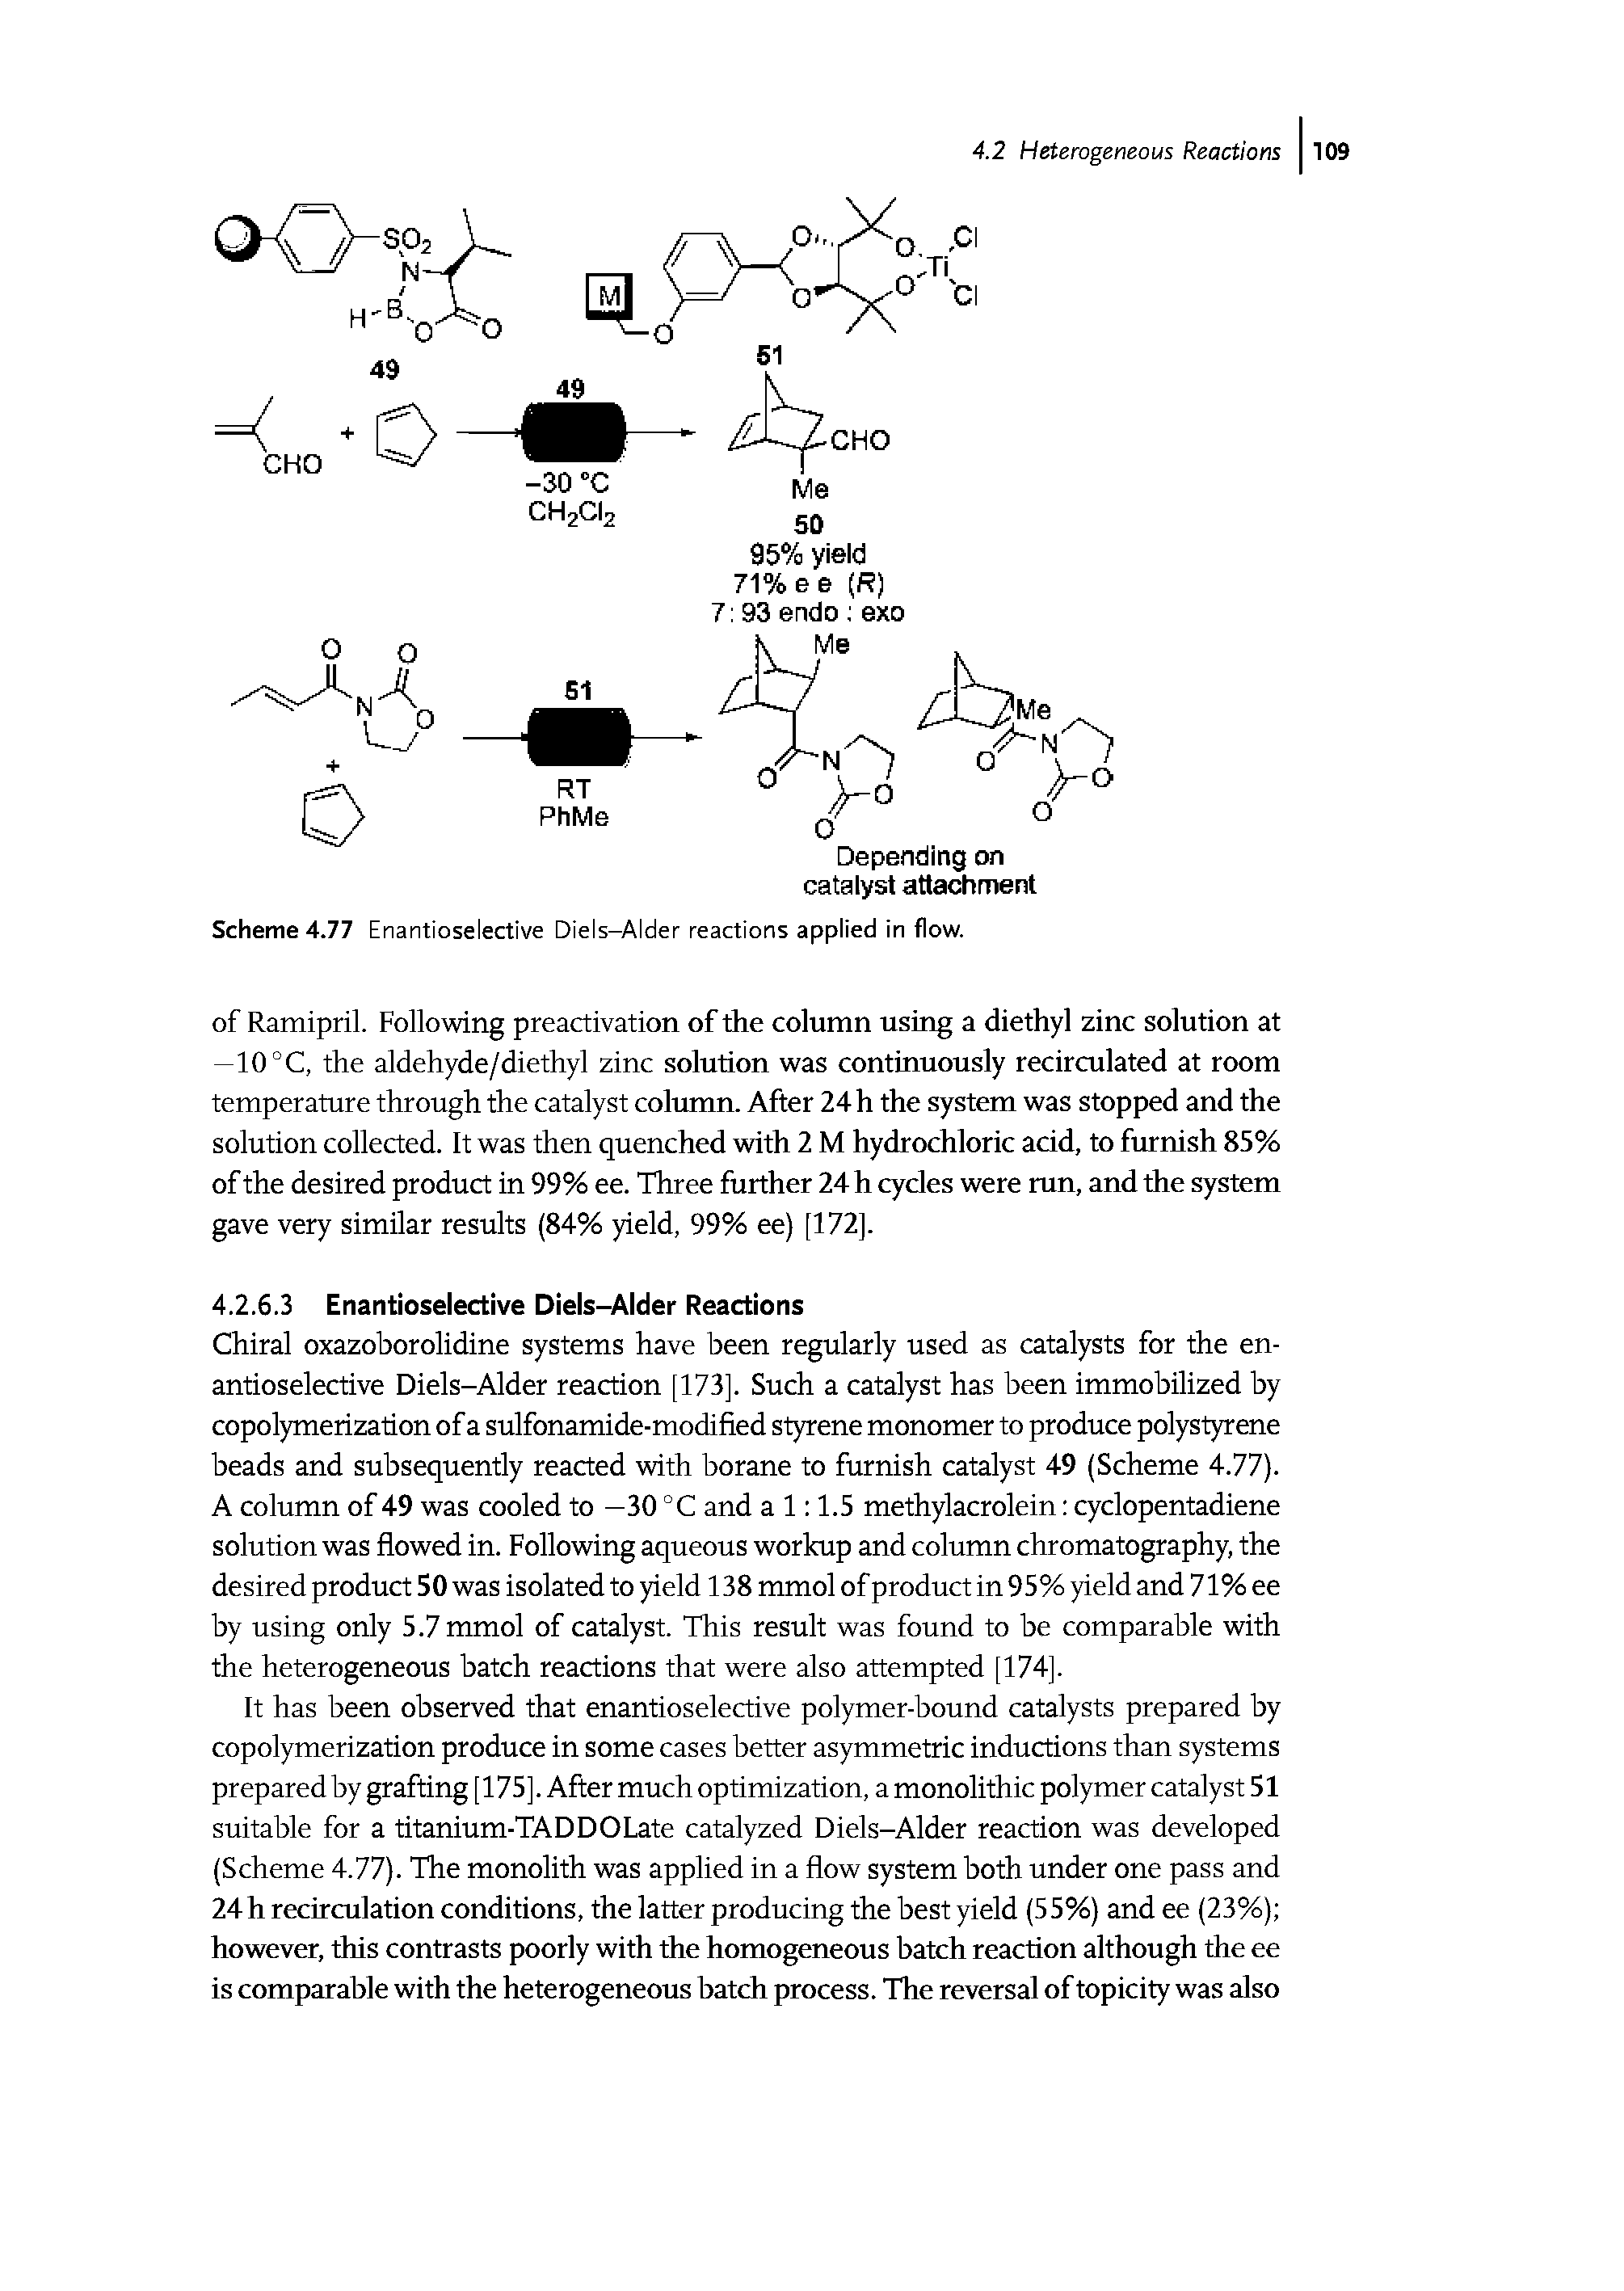 Scheme 4.77 Enantioselective Diels-Alder reactions applied in flow.